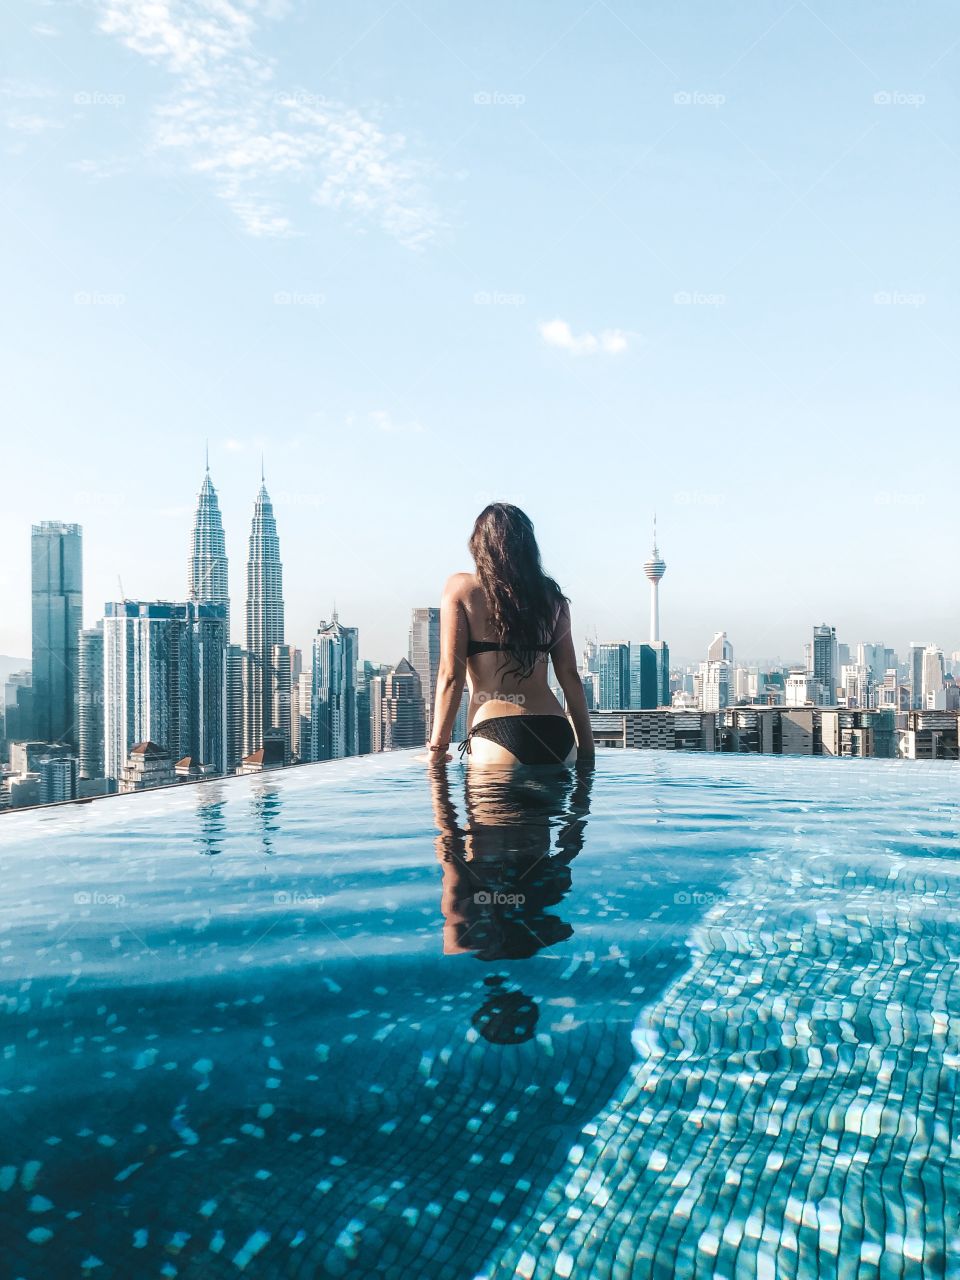 Swimming pool with a great view in Kuala Lumpur